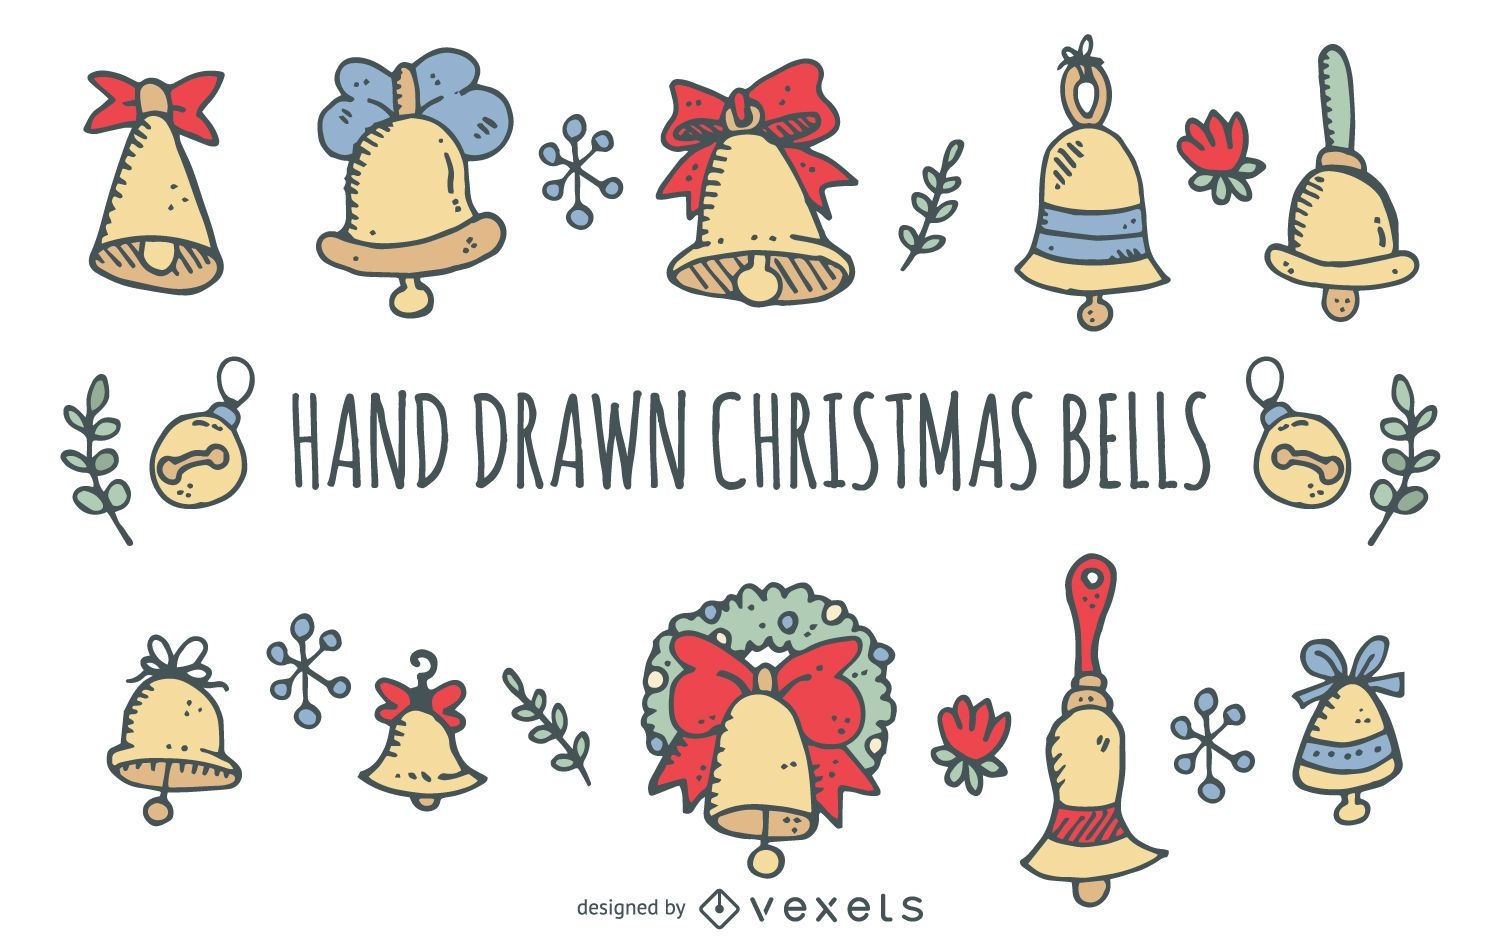 Hand drawn Christmas bells set